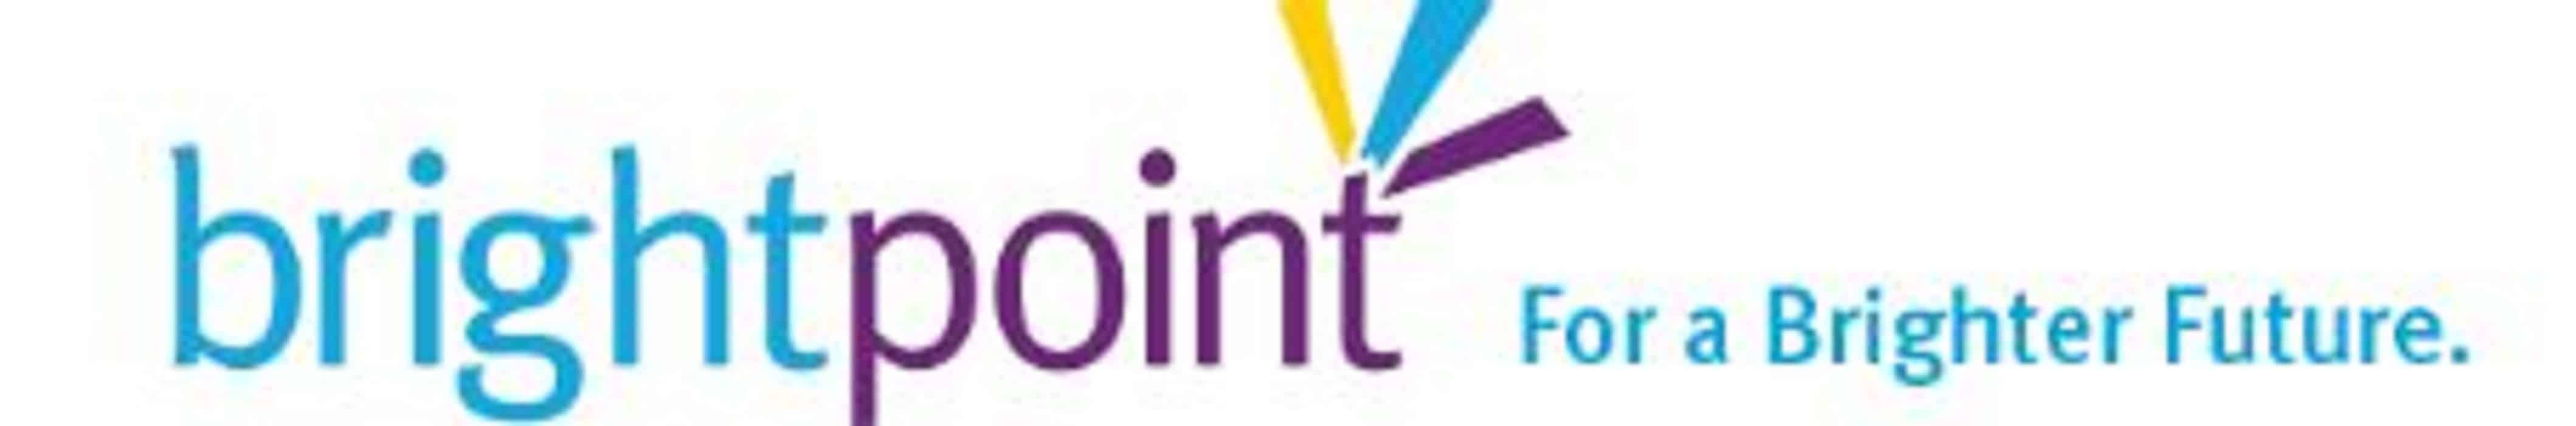 Brightpoint Logo - Brightpoint Summer Cooling Program accepting applications through